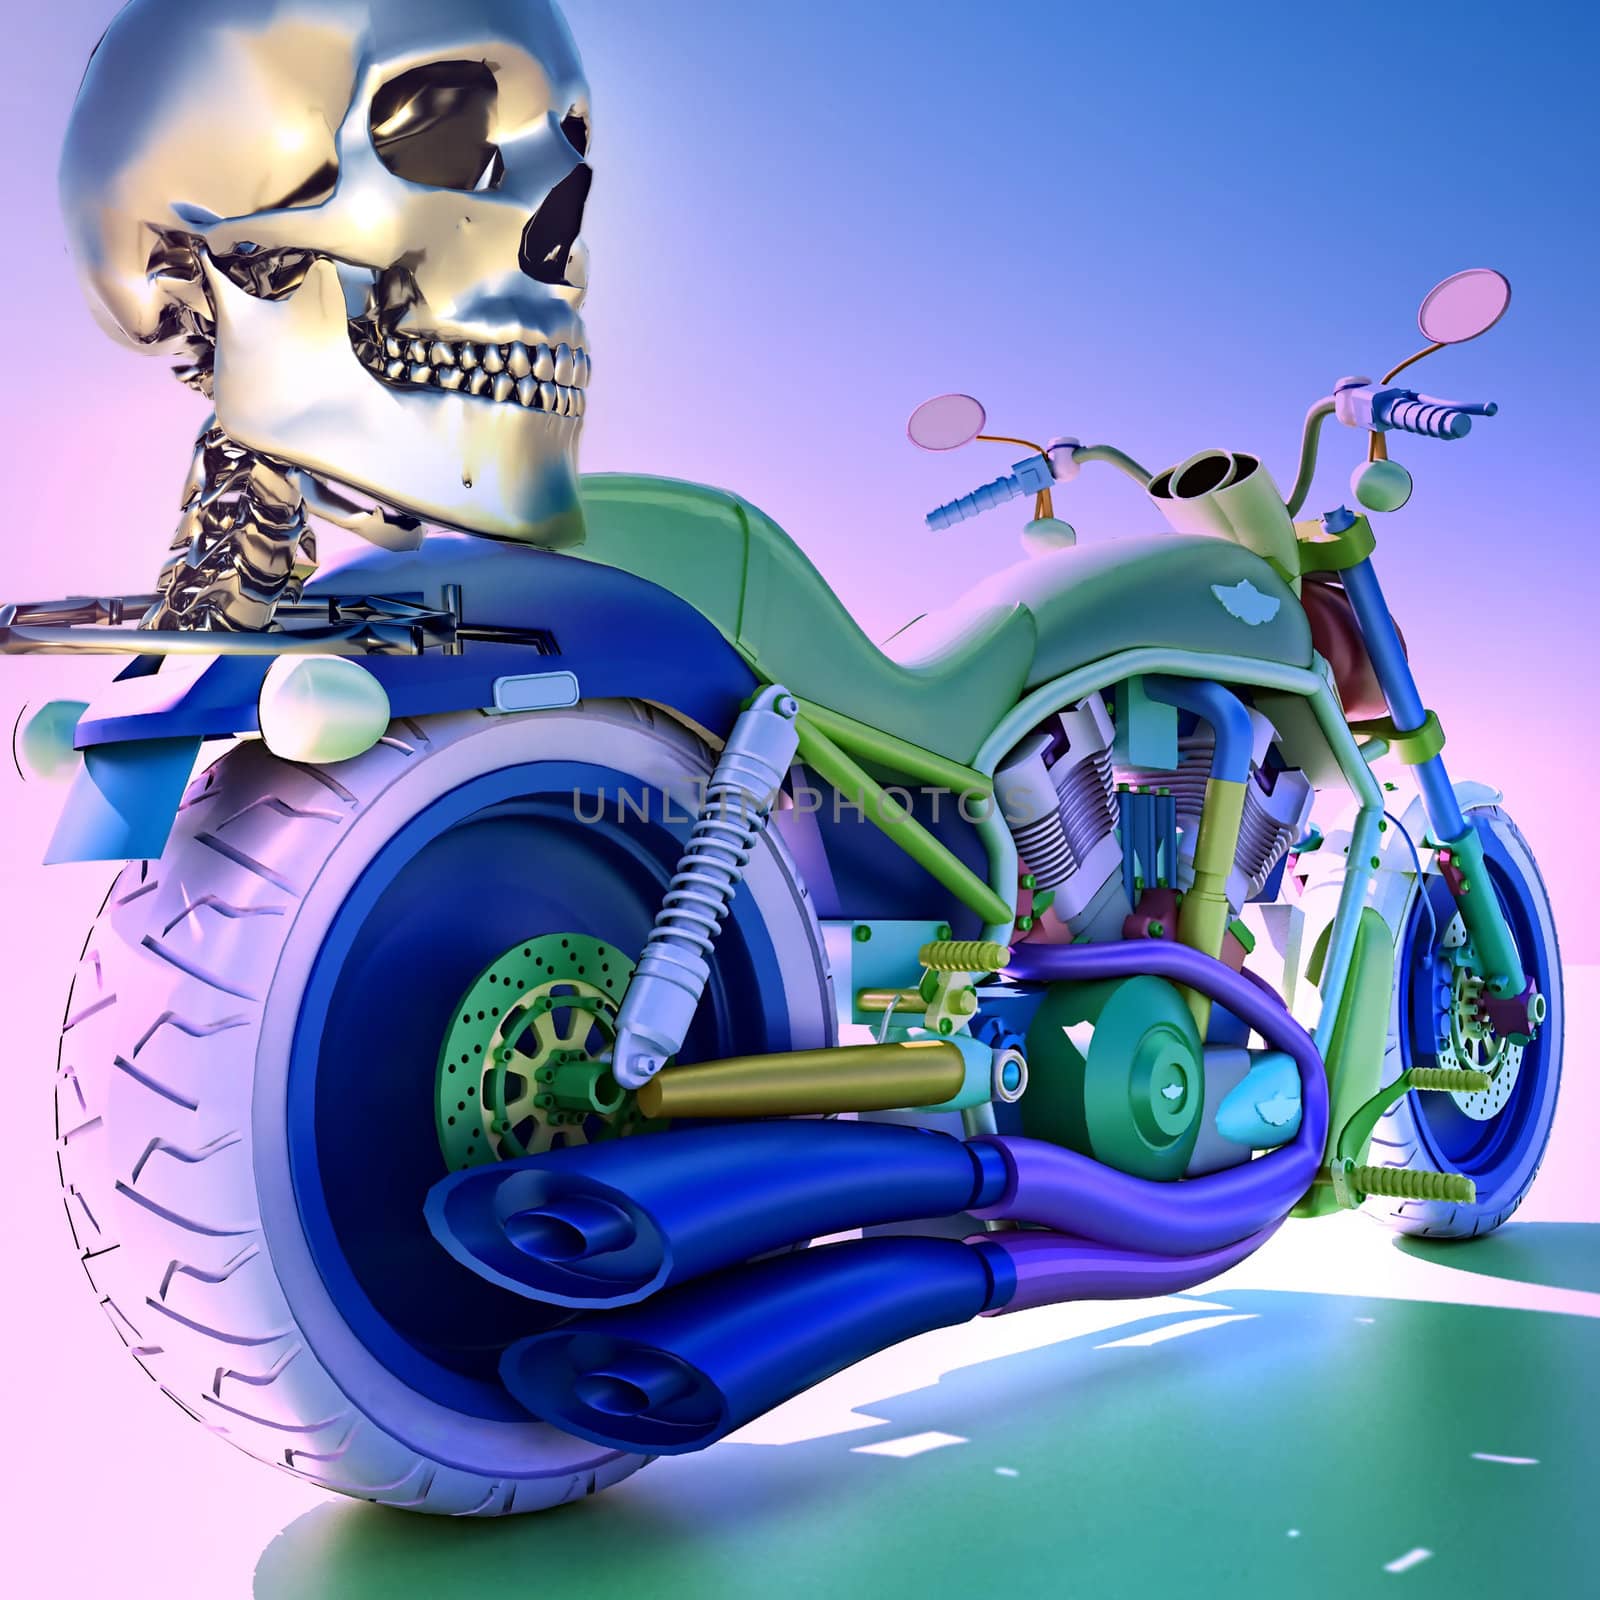 Human skleton on motorbike by andromeda13